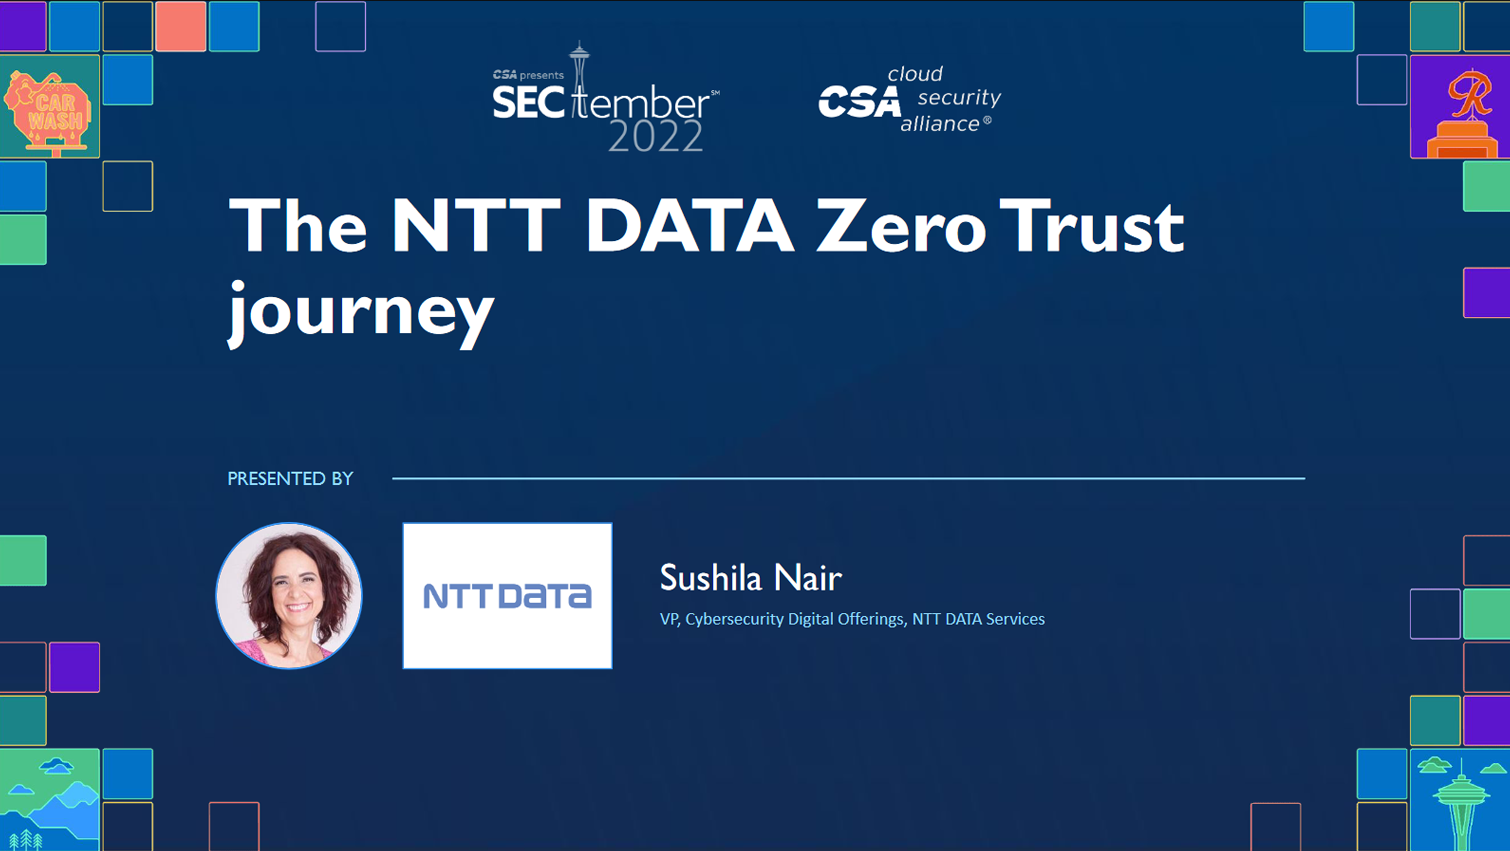 How NTT DATA embarked on the Zero Trust Journey